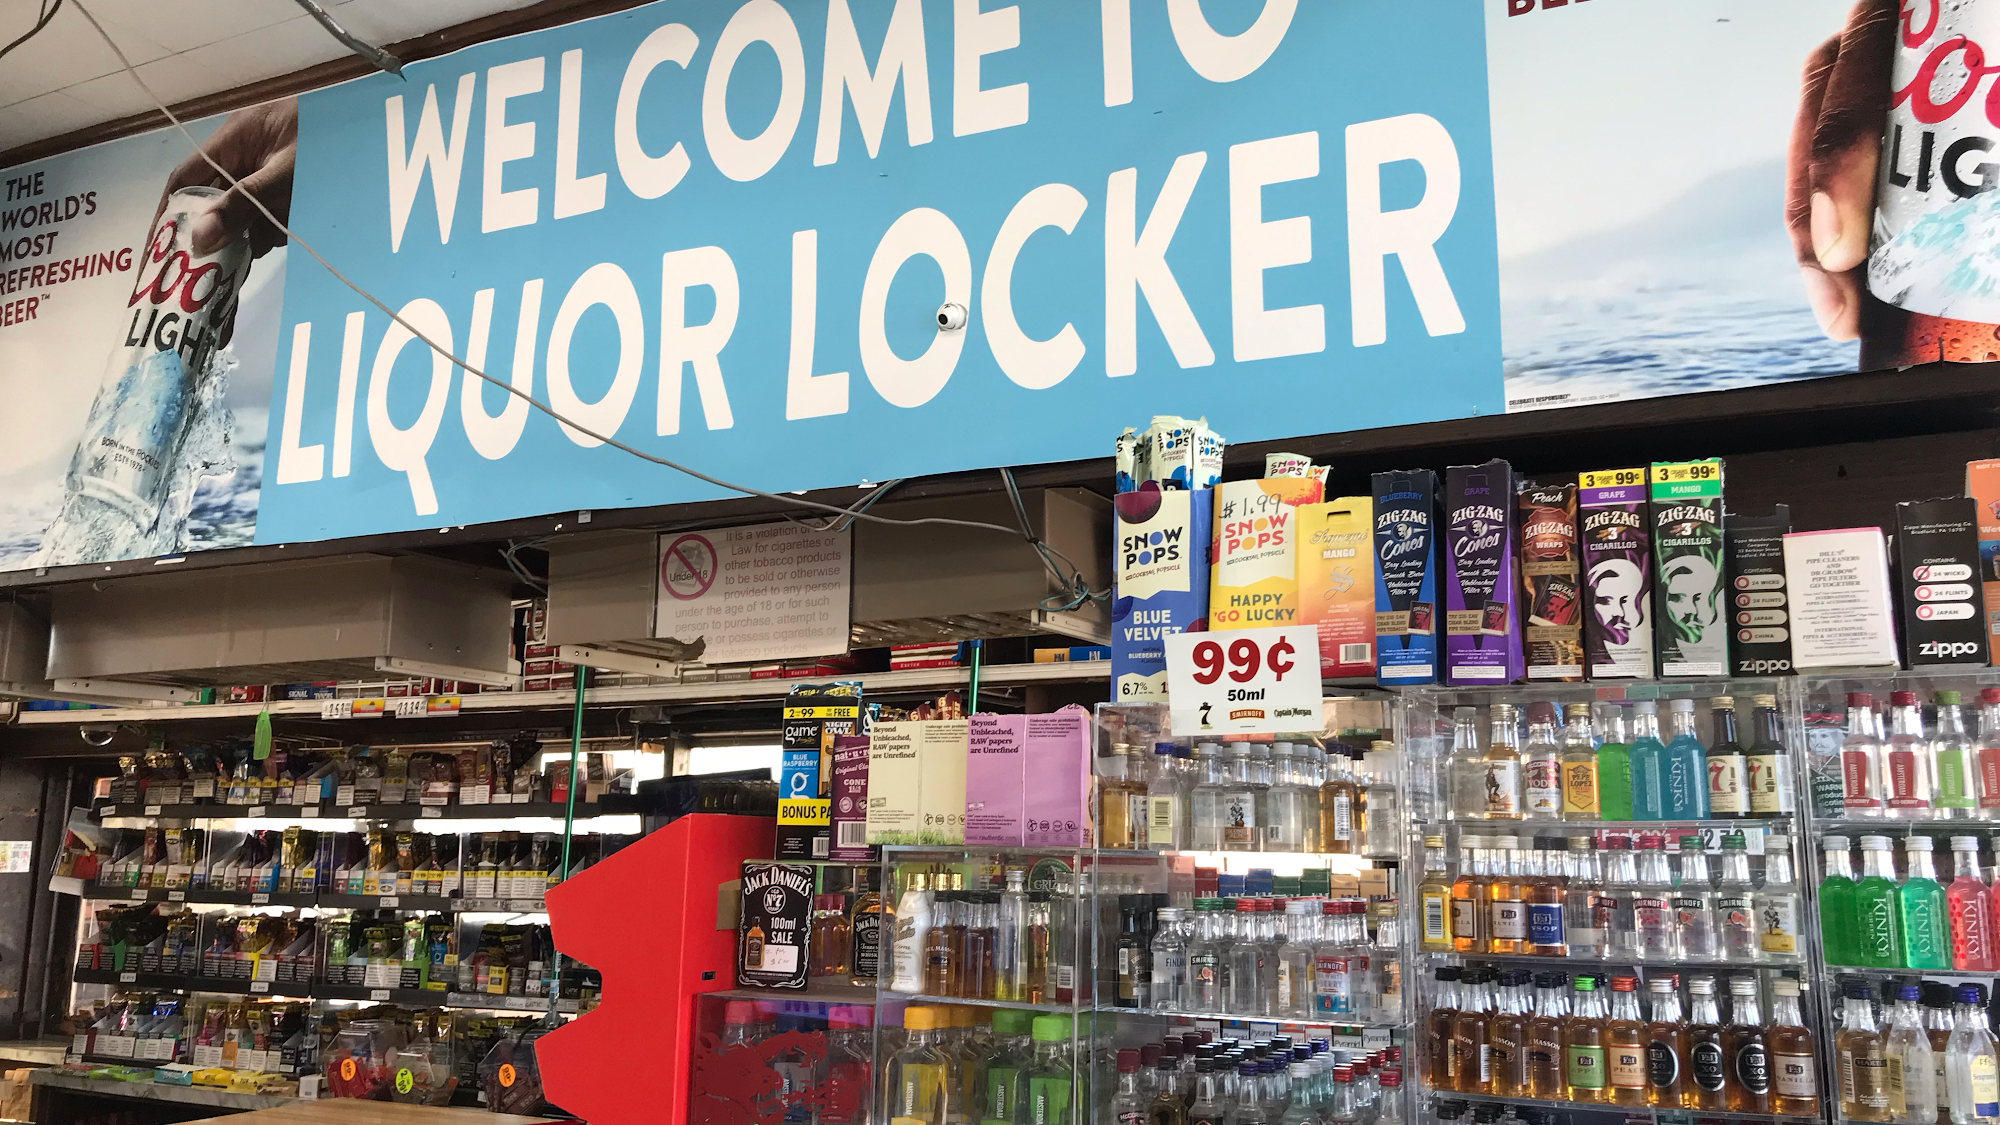 Liquor Locker Drive-Thru Store